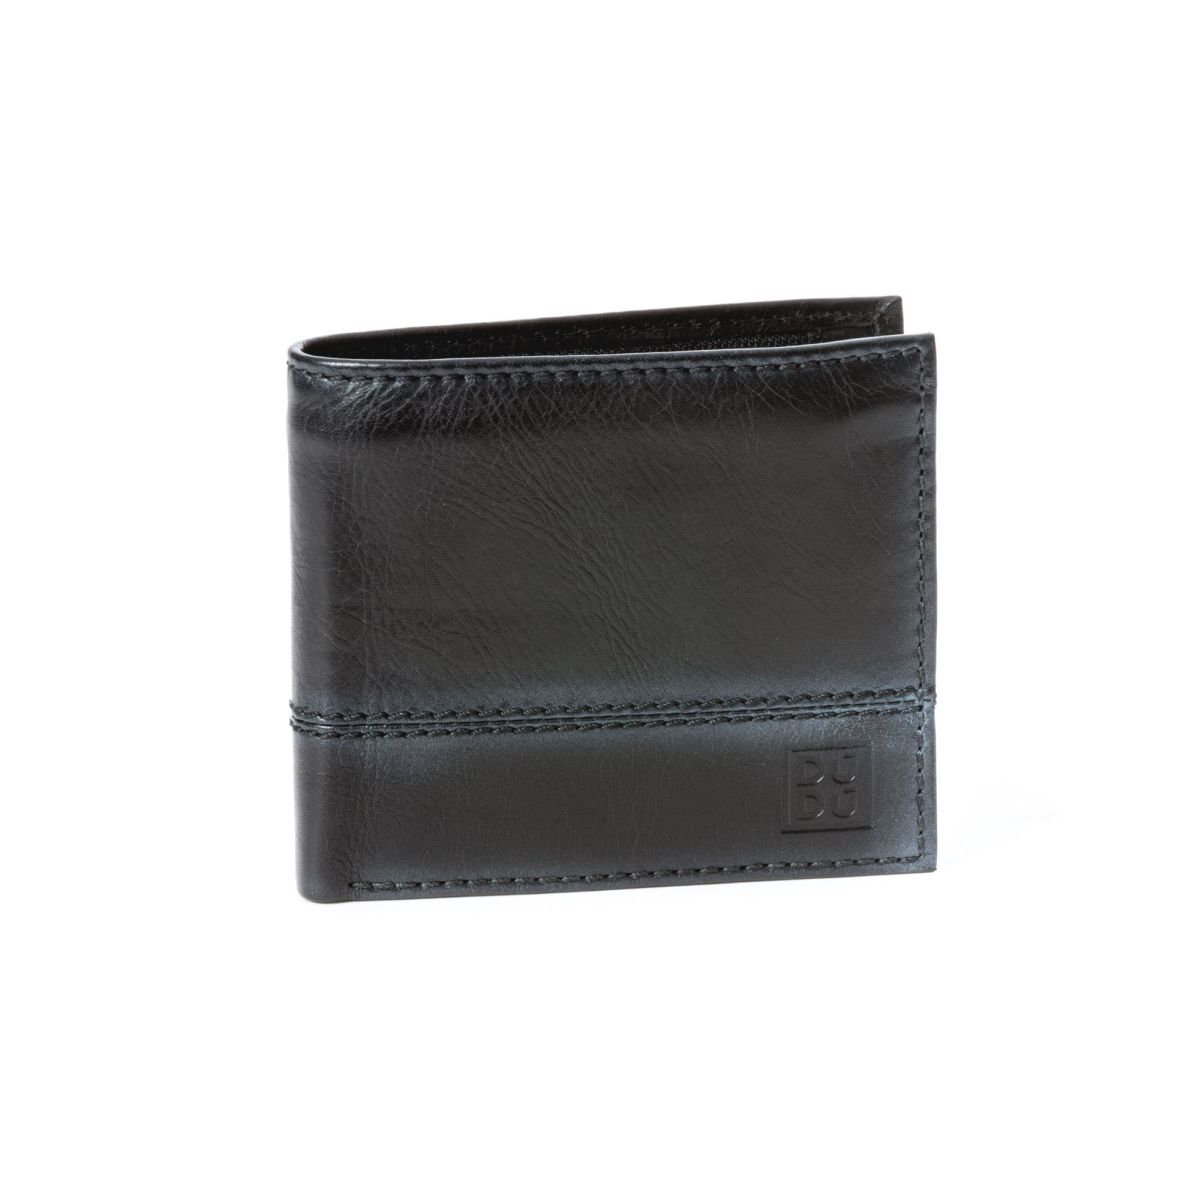 DuDu Unique Leather Wallet With Coin Purse - Black